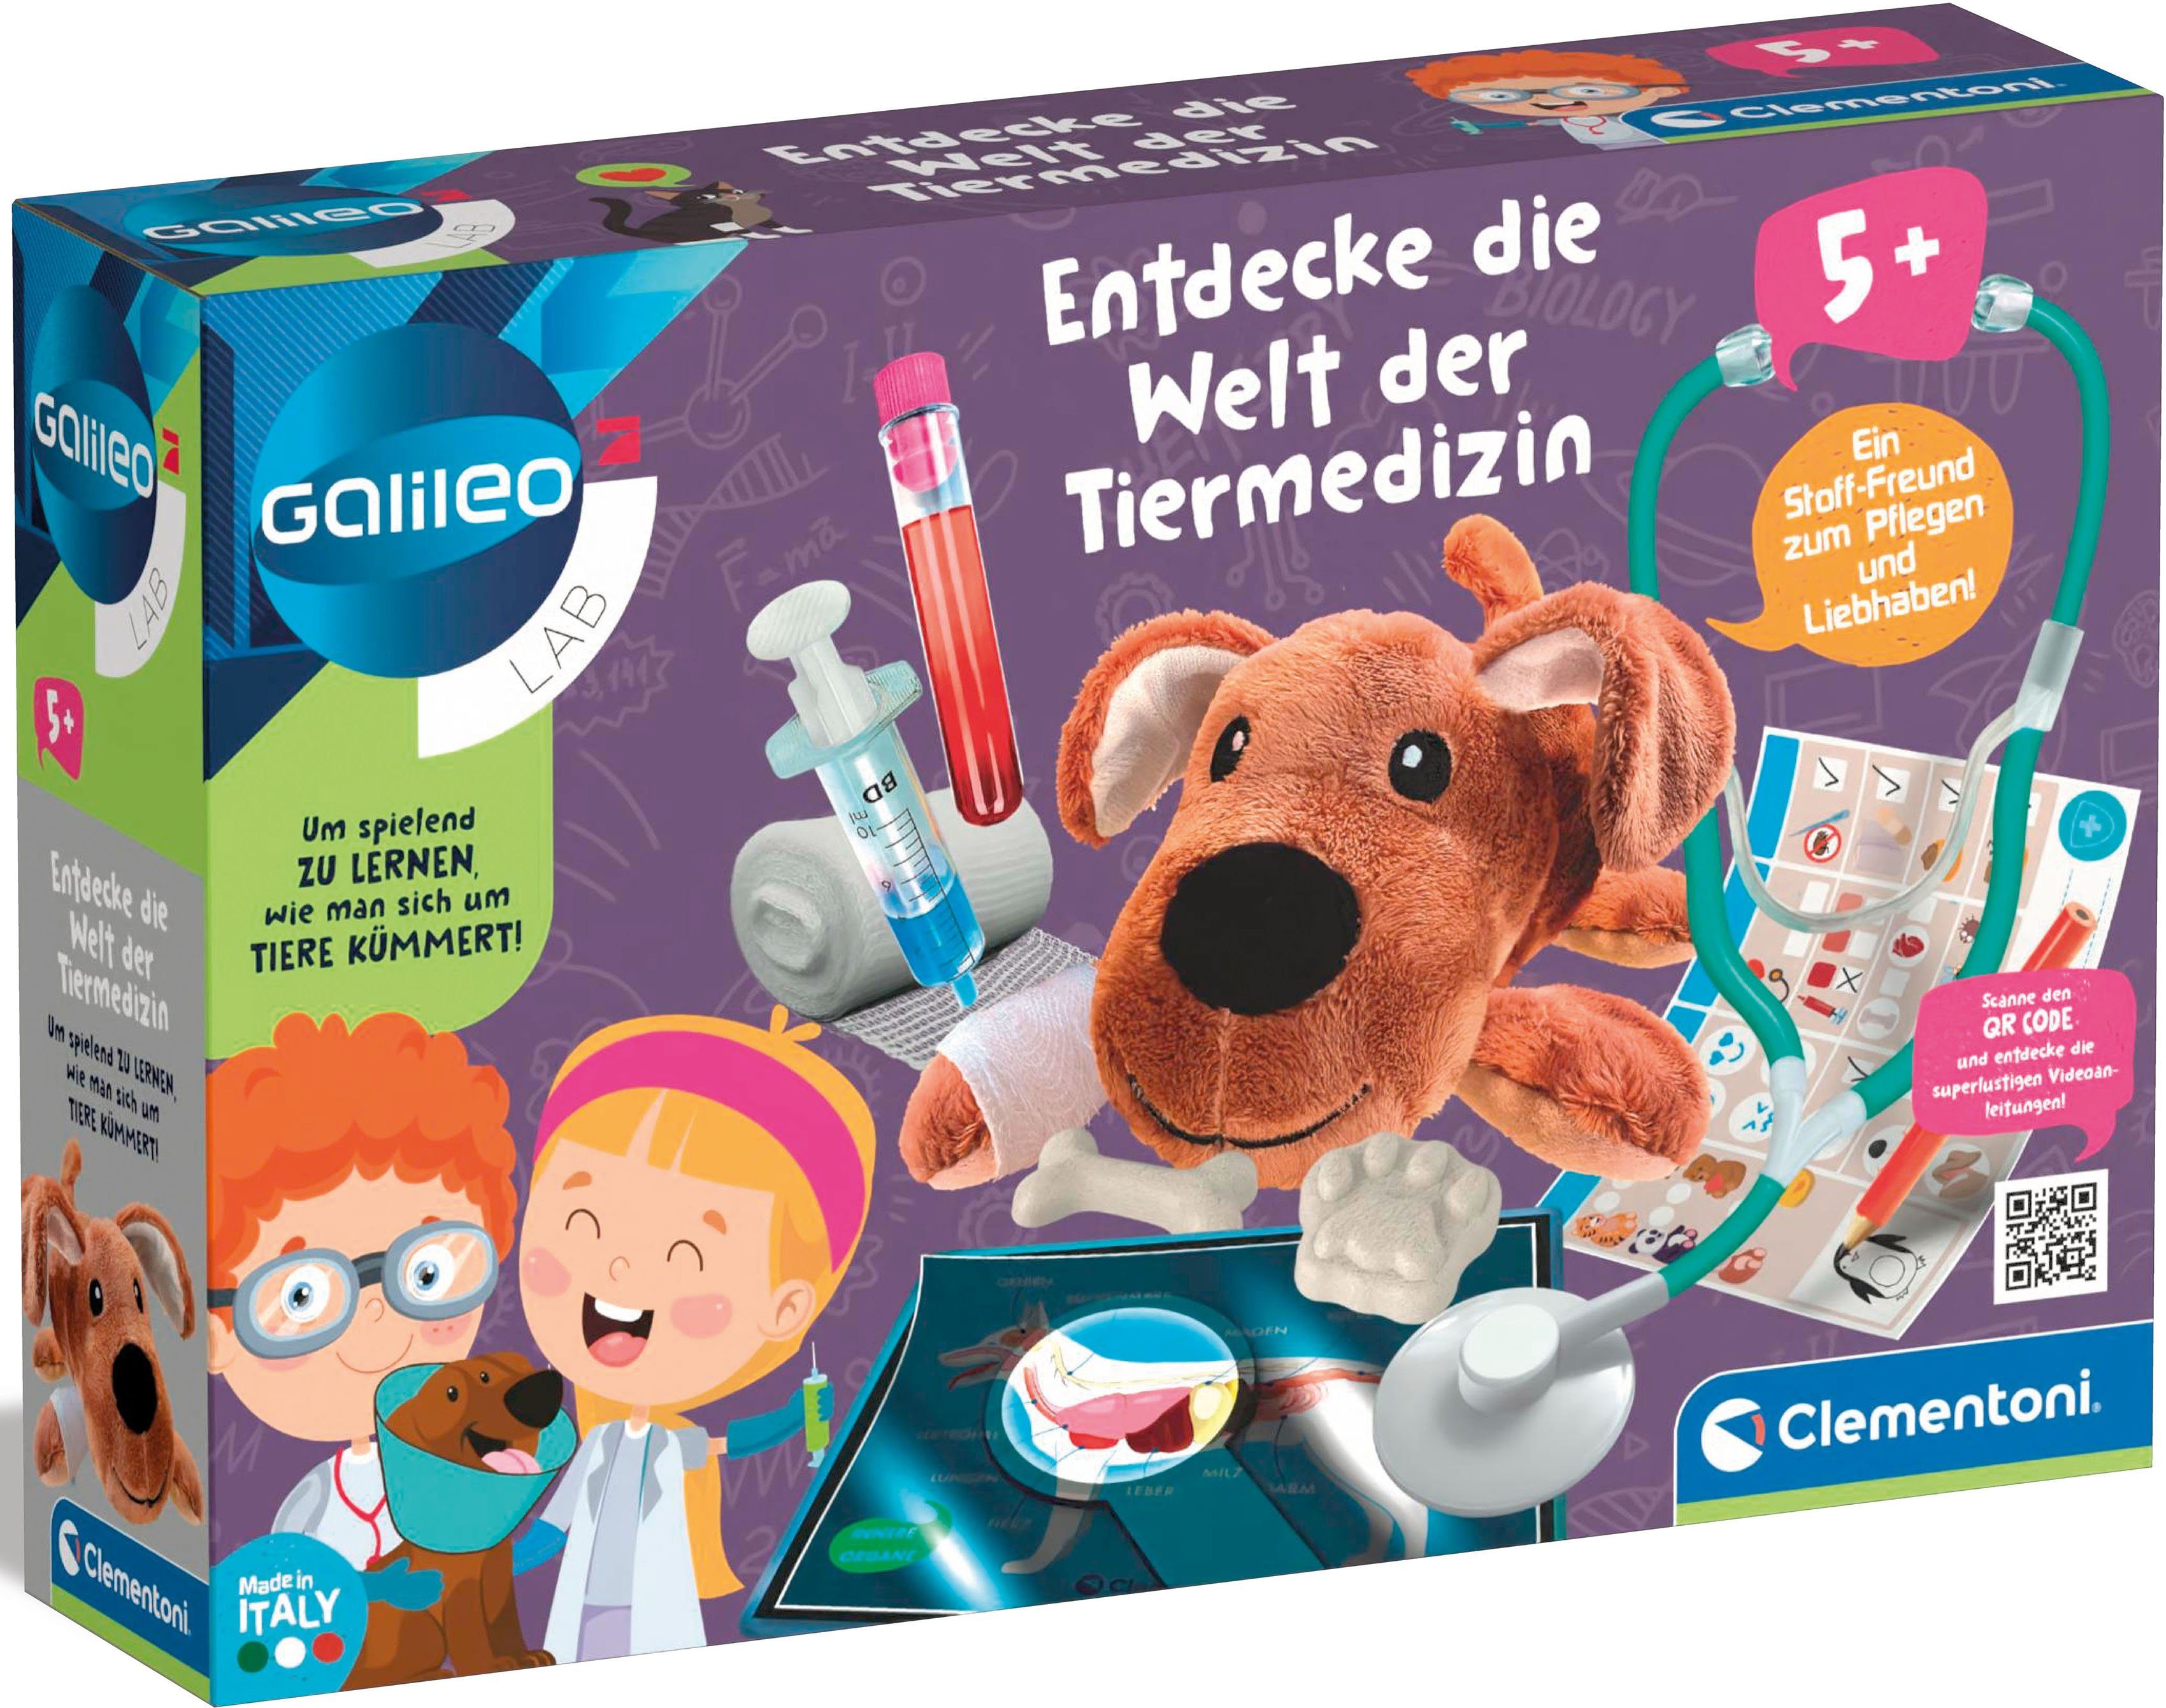 Clementoni® Experimentierkasten Galileo, Entdecke die Welt Tiermedizin, Made in Europe